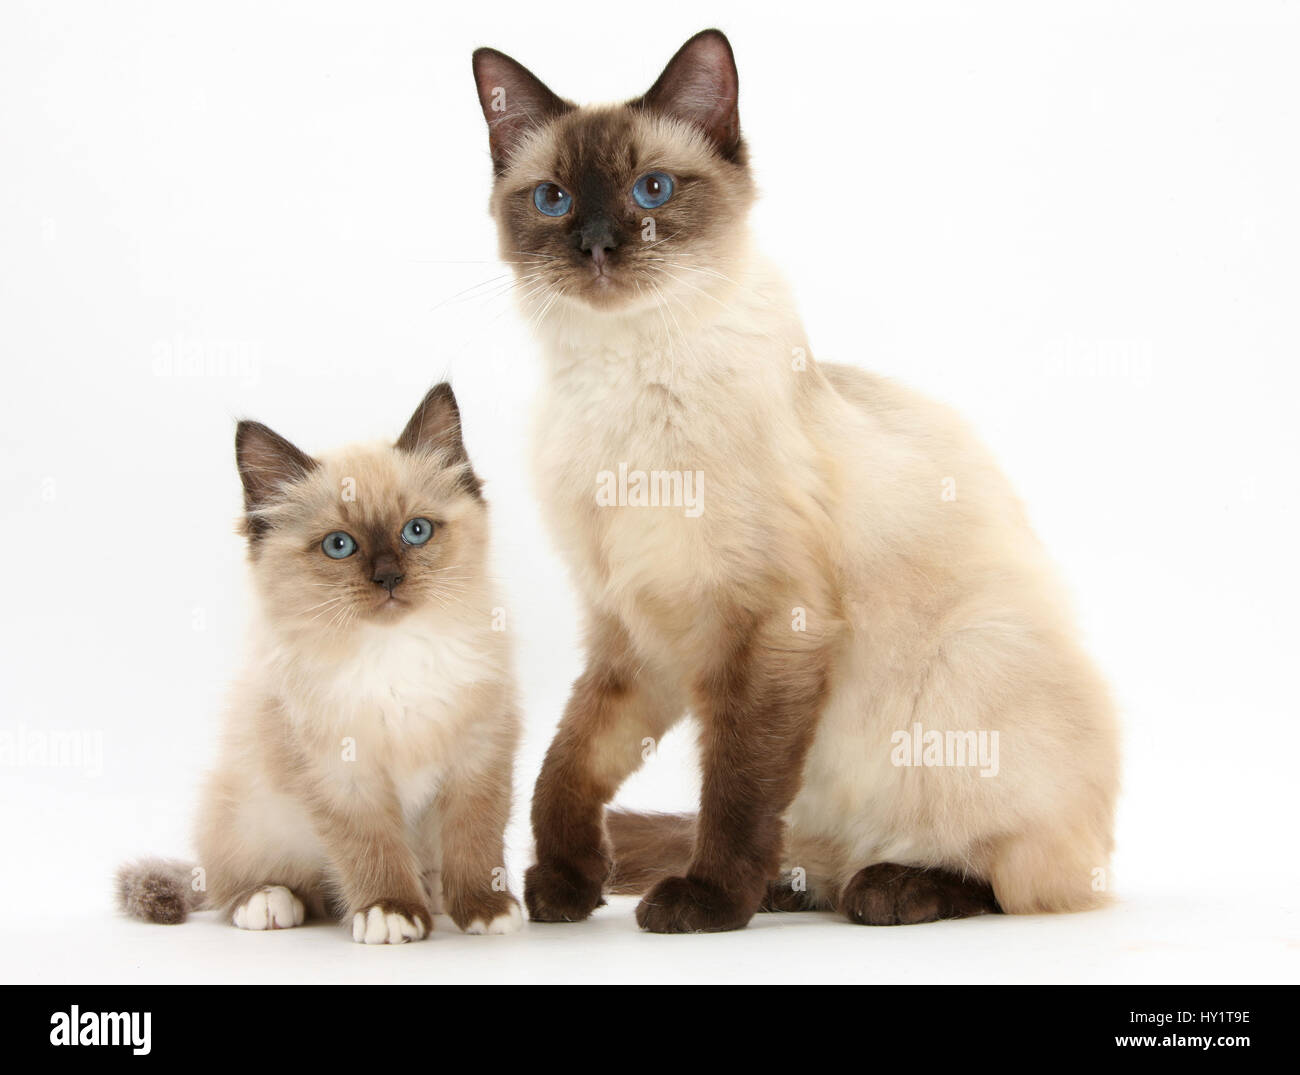 Birman-cross cat and kitten. Stock Photo